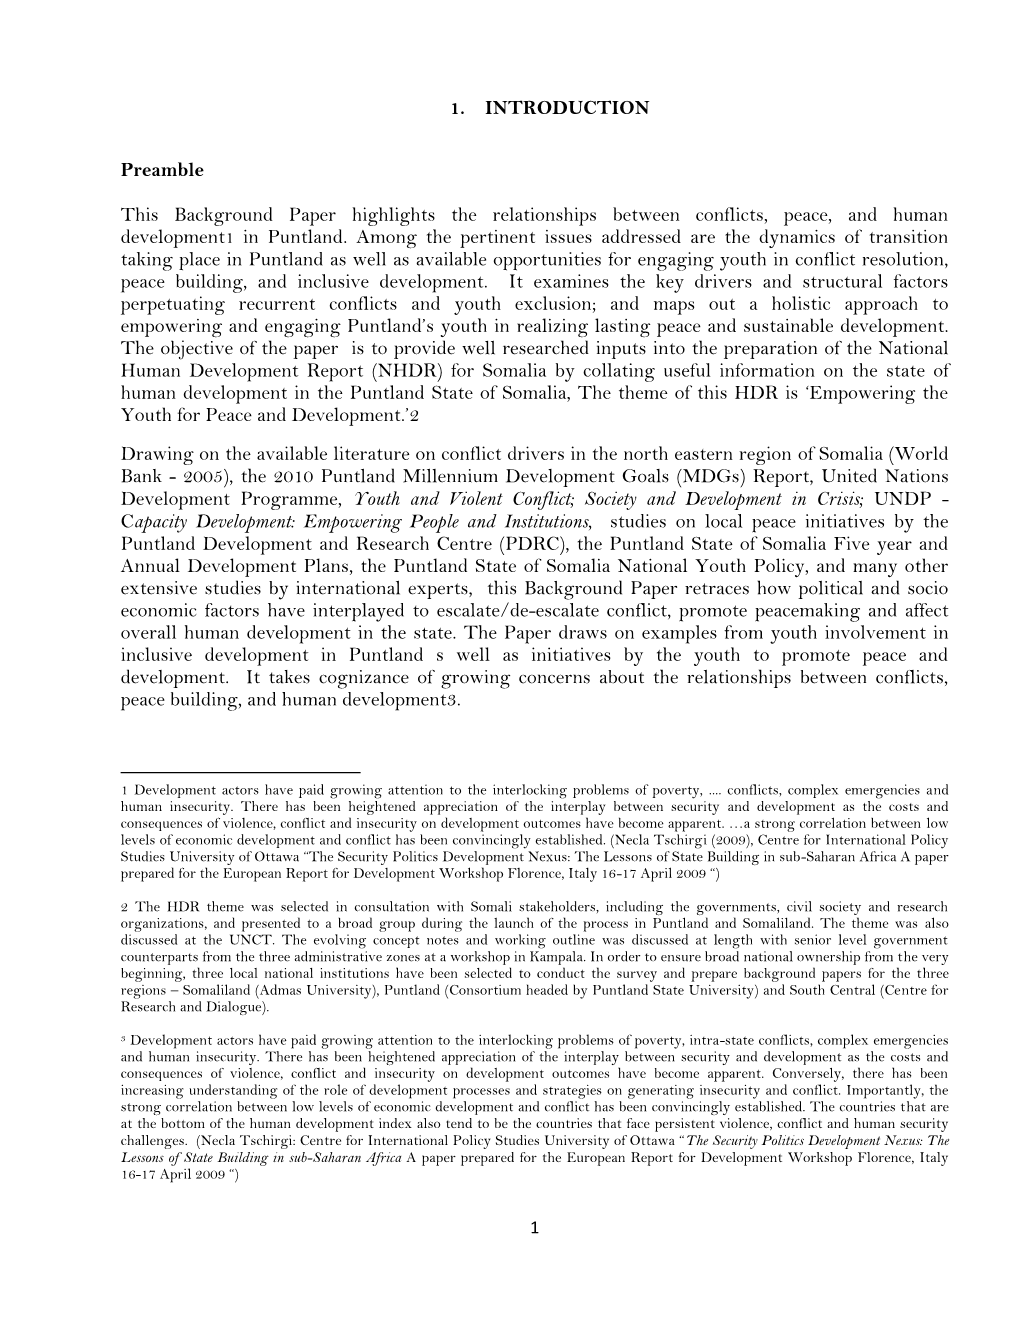 Draft Background Paper on Puntland Hdr September